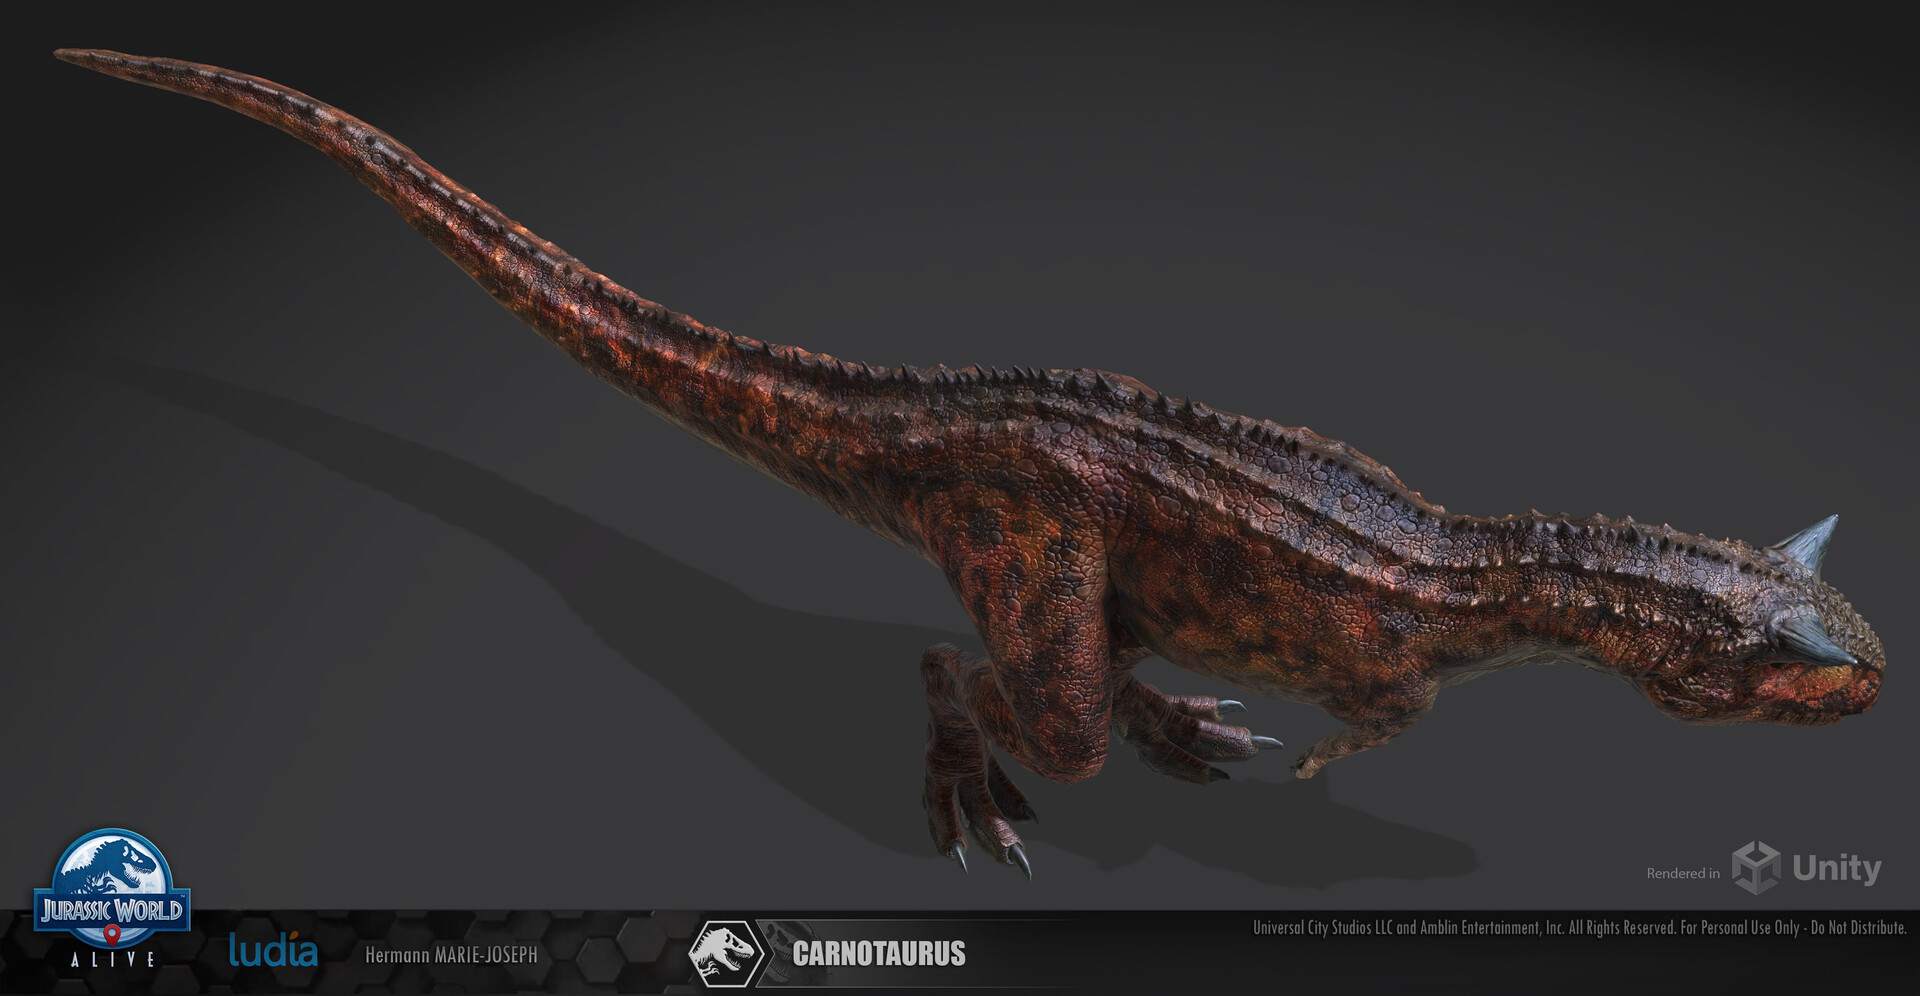 ArtStation - Carnotaurus: The Lost World: Jurassic Park